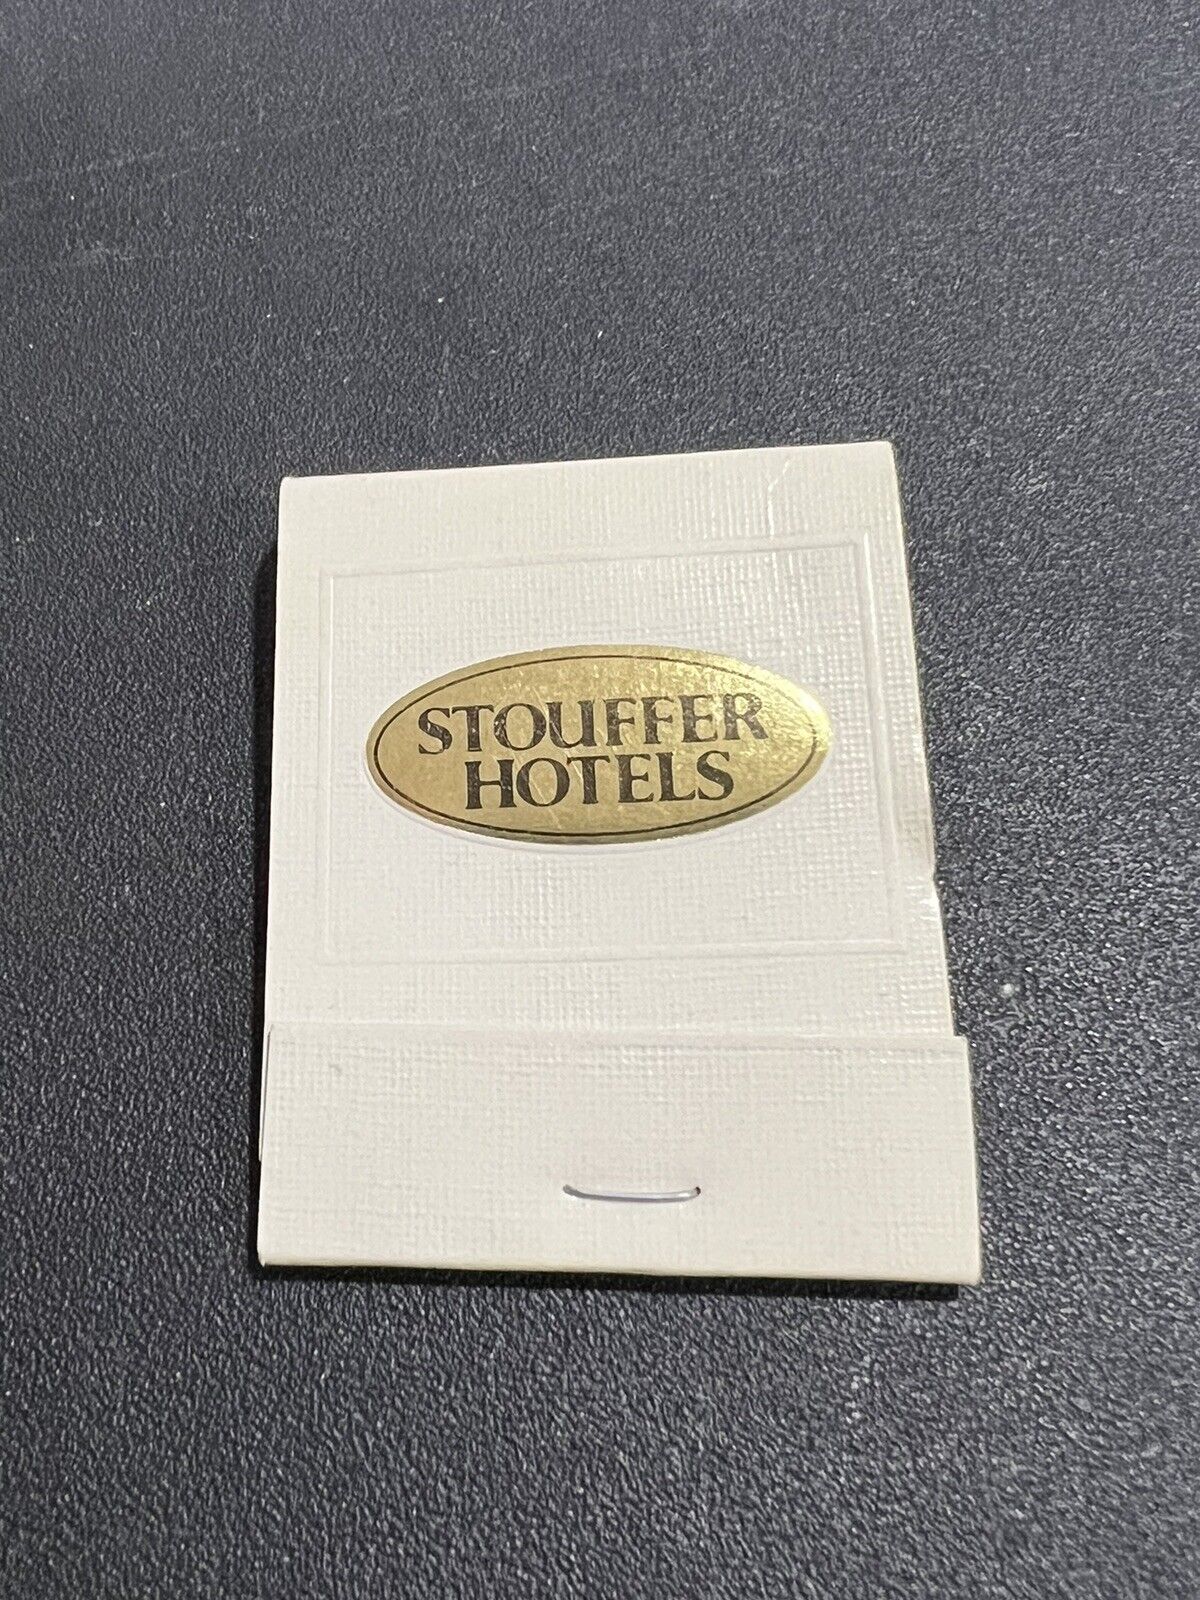 Stouffer Hotels Matchbook Advertisement Gold Logo Unique Rare Vintage